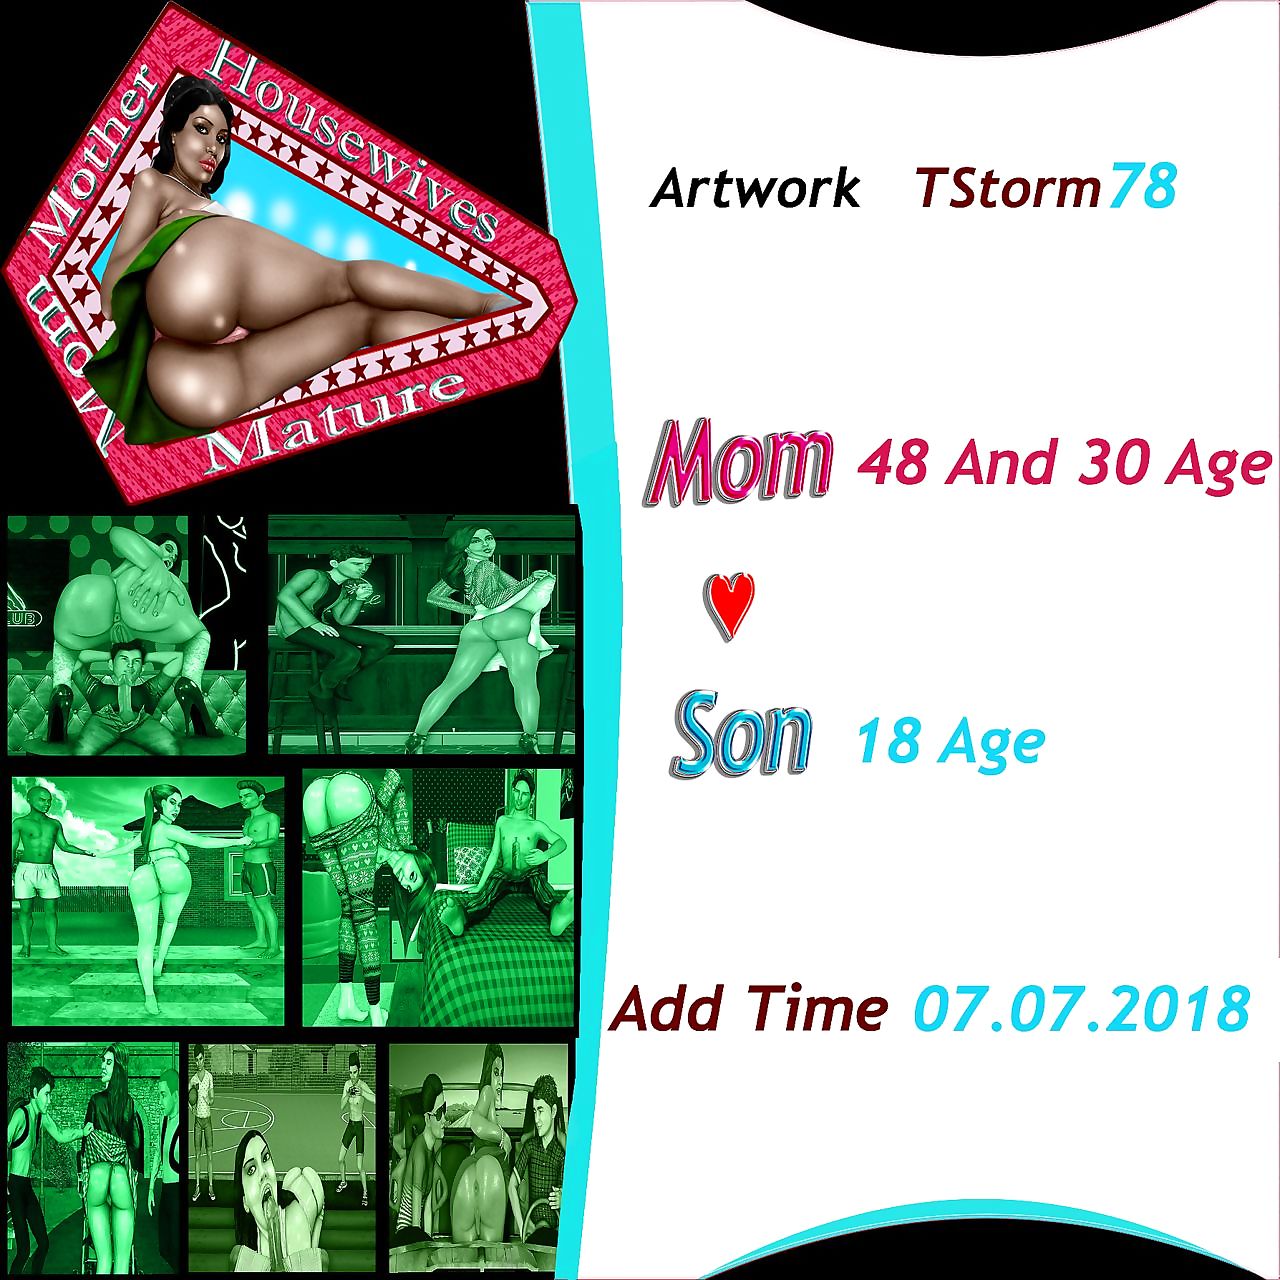 Artwork TStorm78 - Mom Special Gallery - part 2